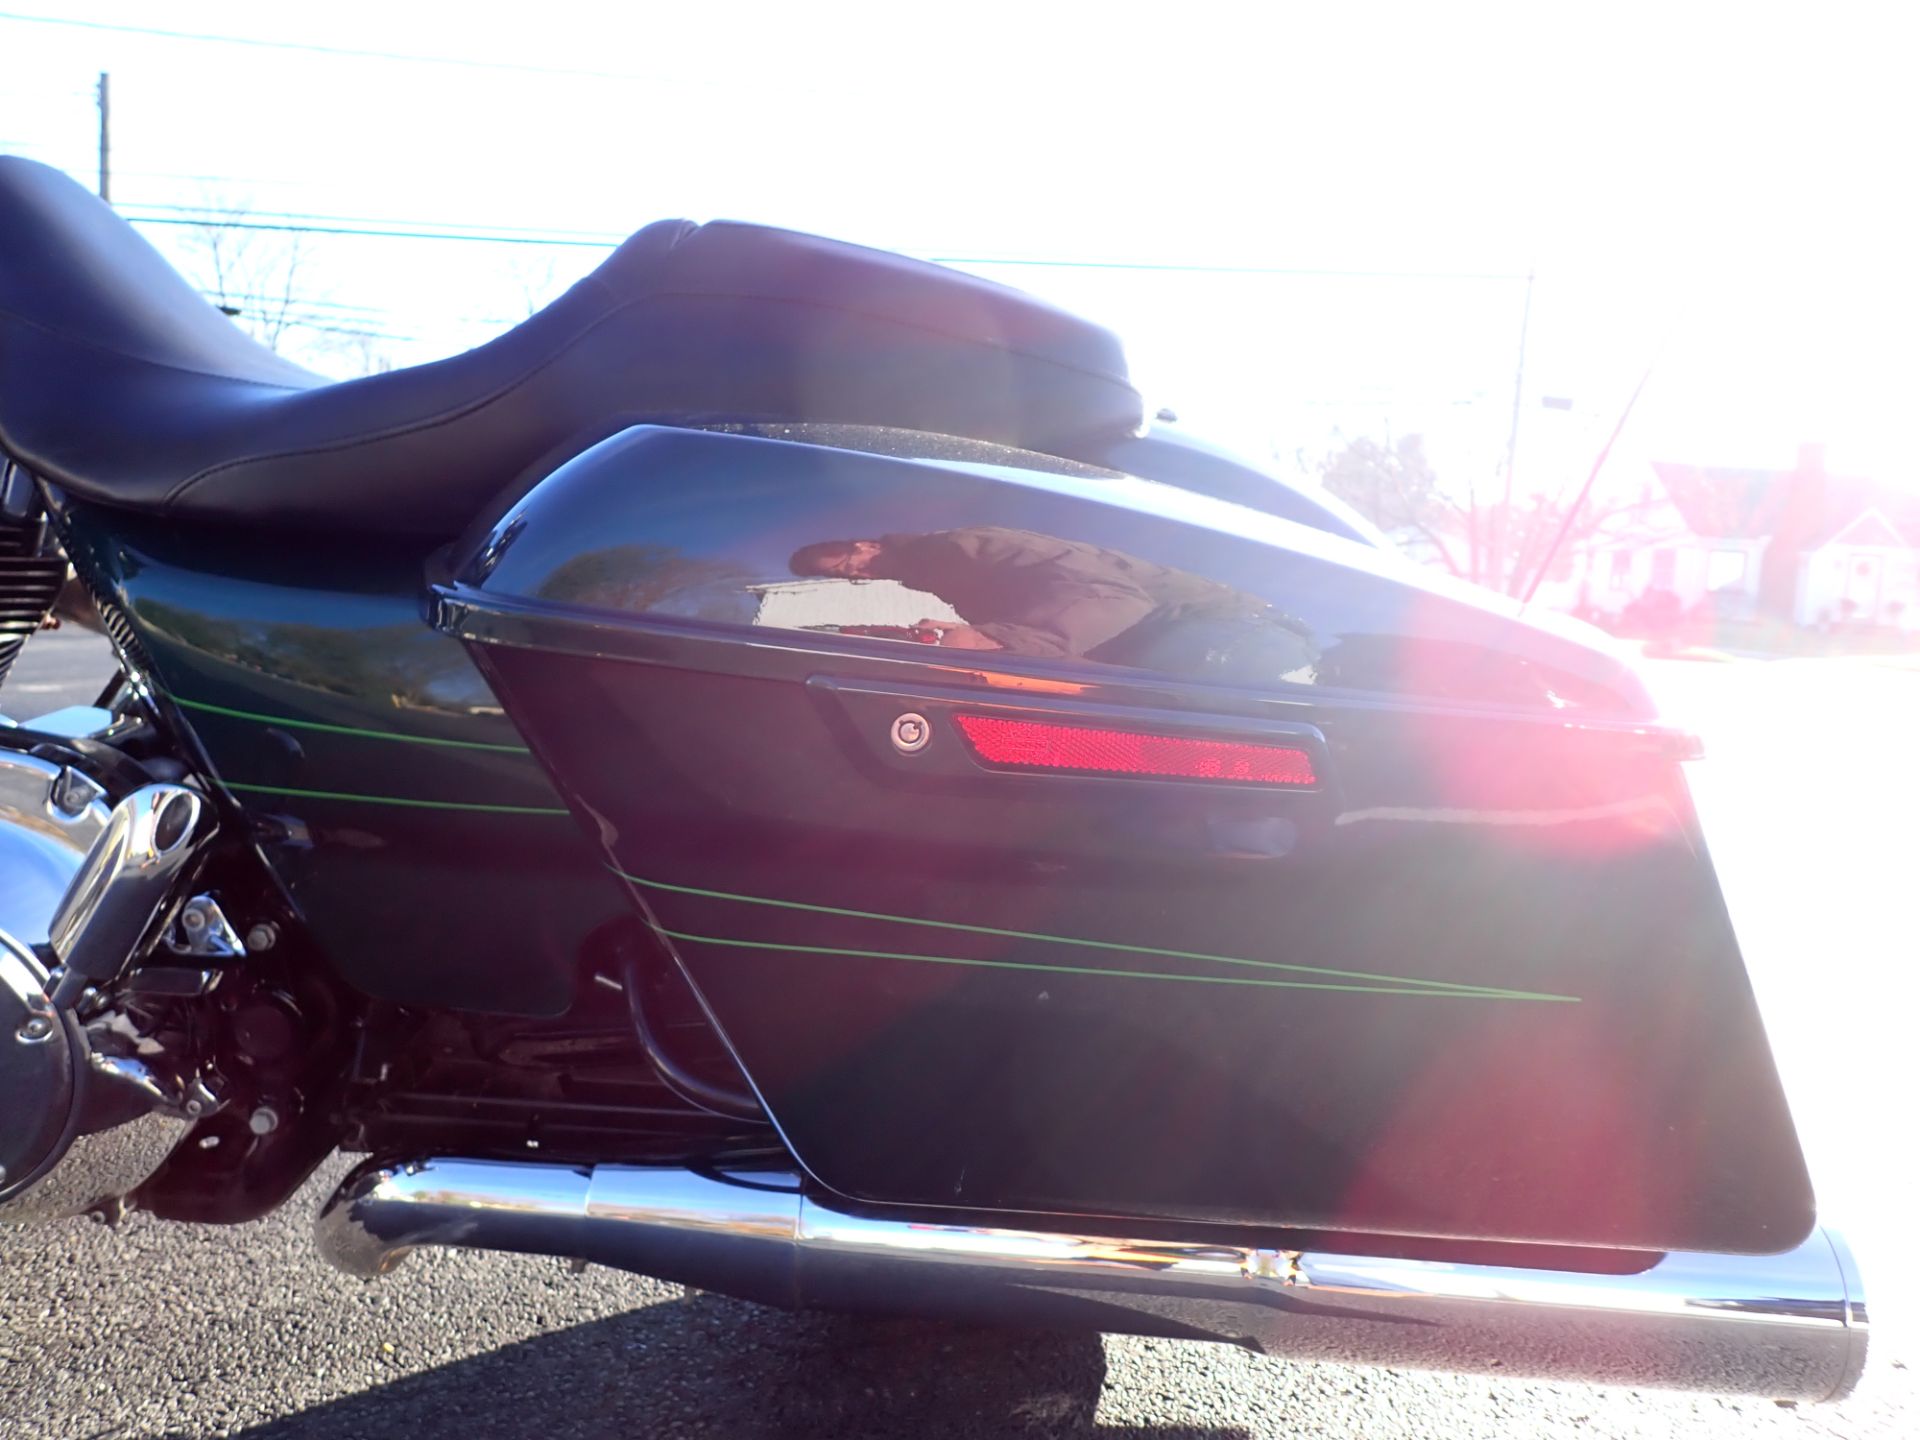 2015 Harley-Davidson Street Glide® Special in Massillon, Ohio - Photo 7